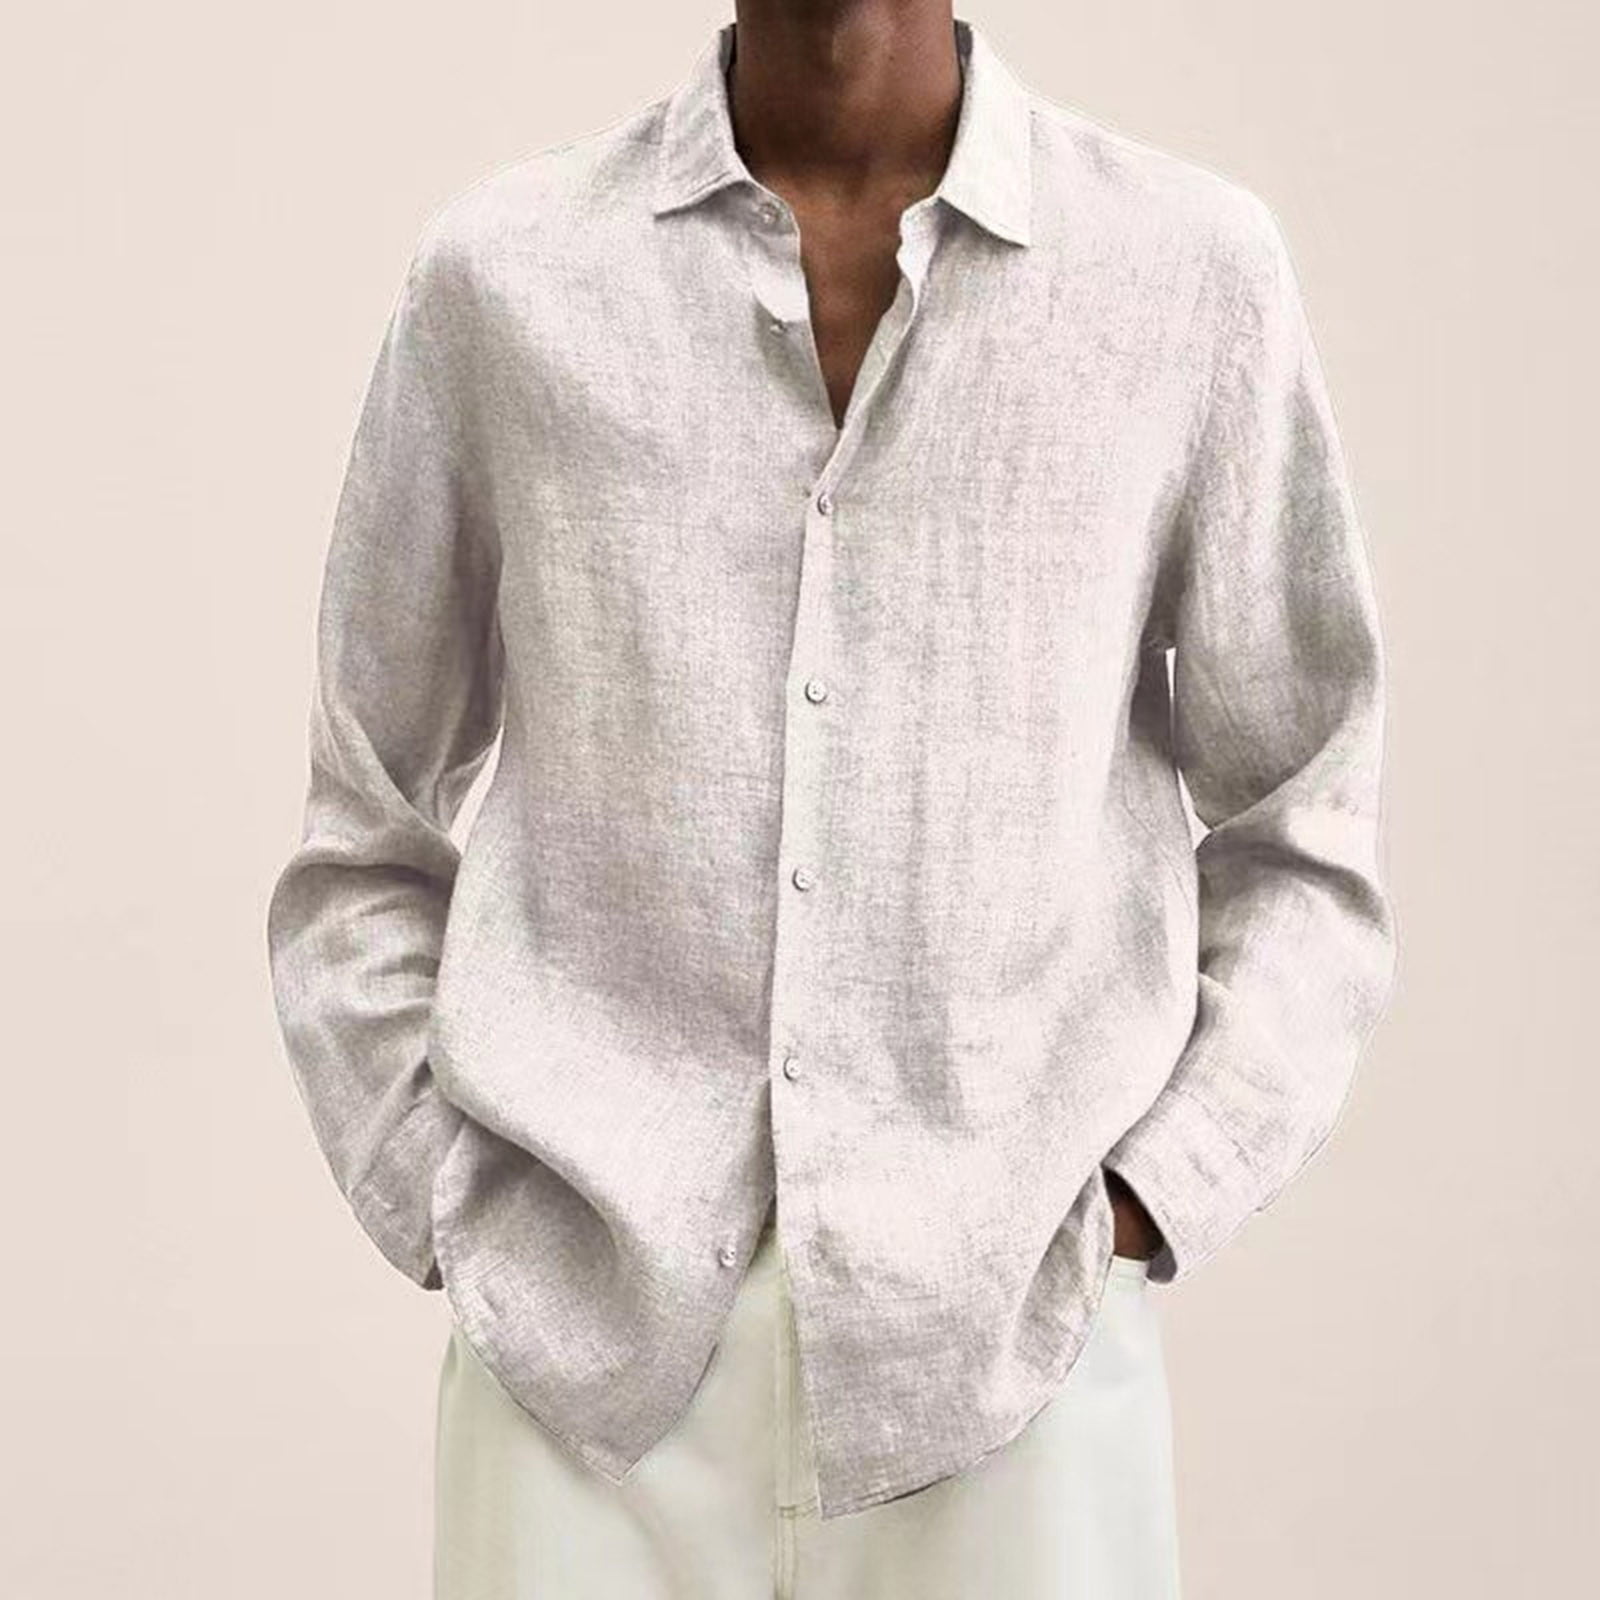 ZXHACSJ Designer Spring Summer Men's Casual Cotton Linen Solid 